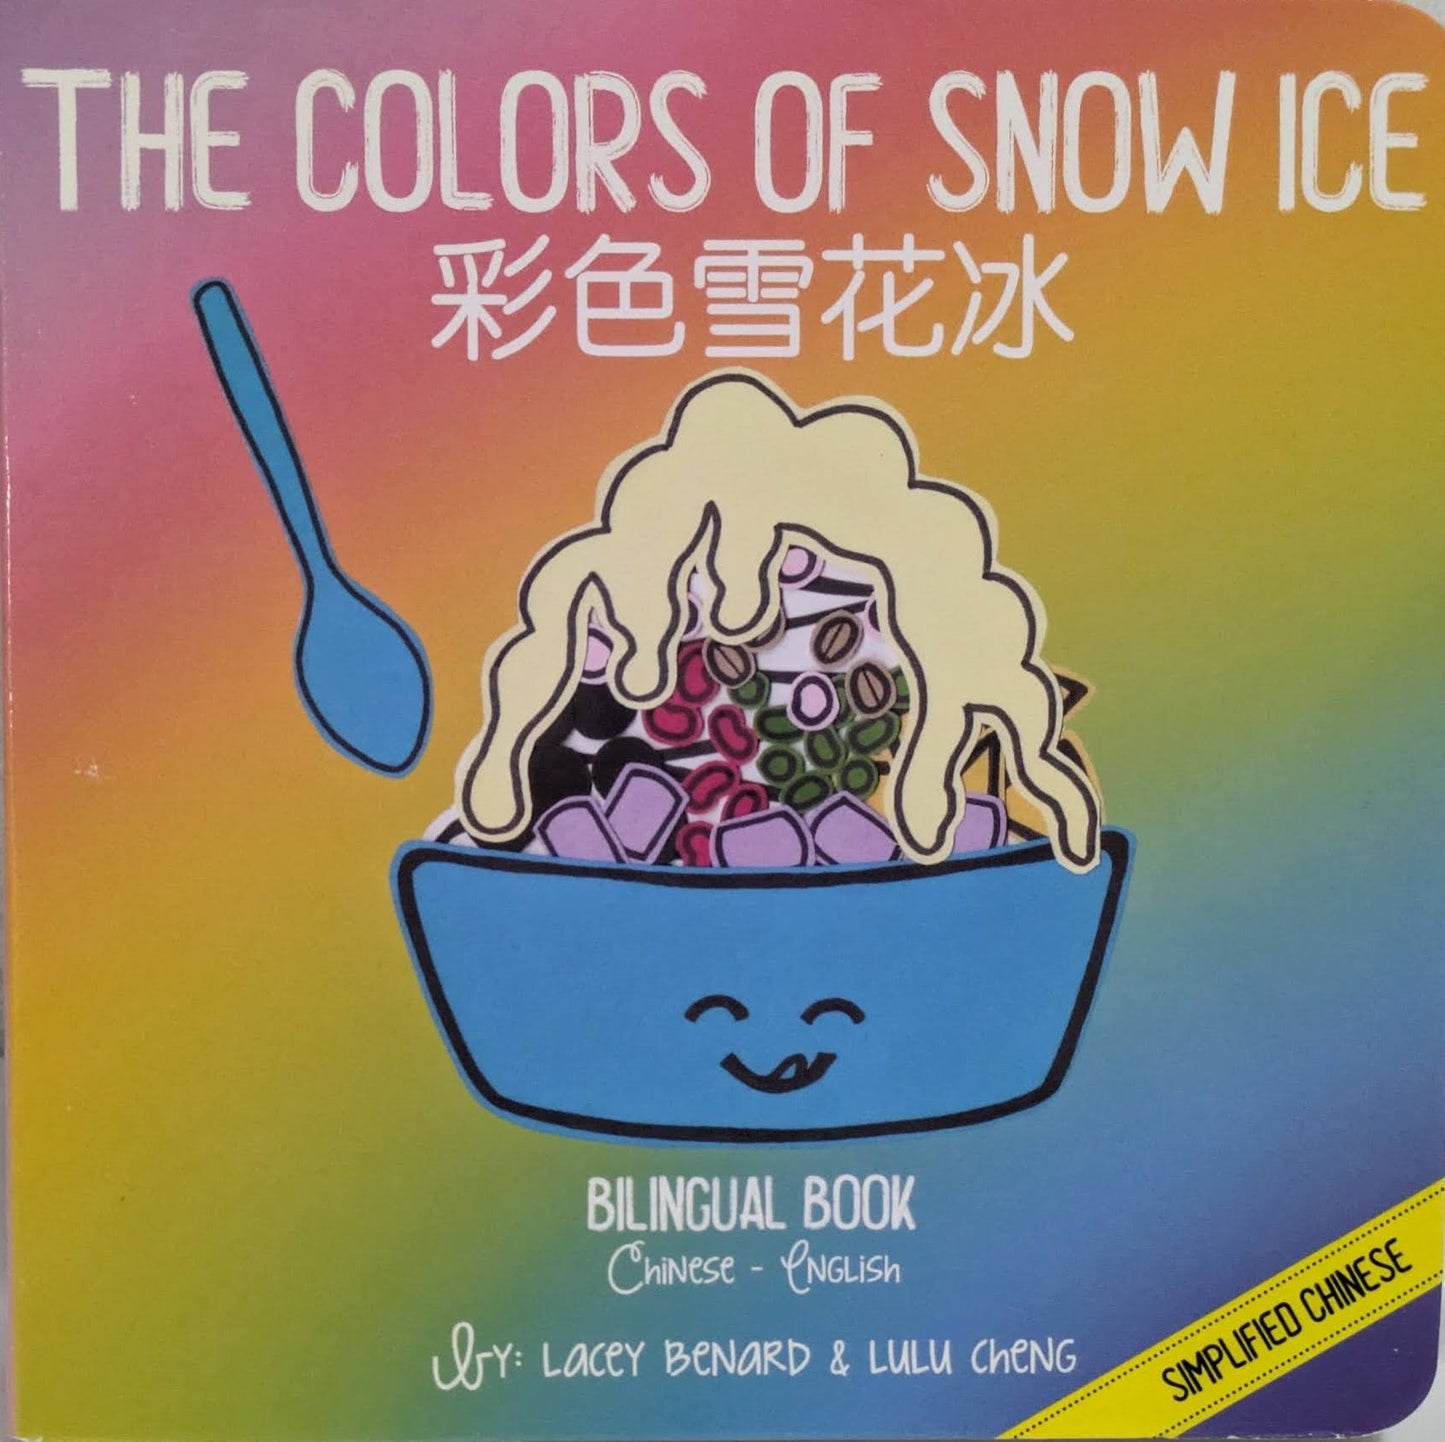 Bitty Bao: The Colors of Snow Ice • 彩色雪花冰 (Mandarin)